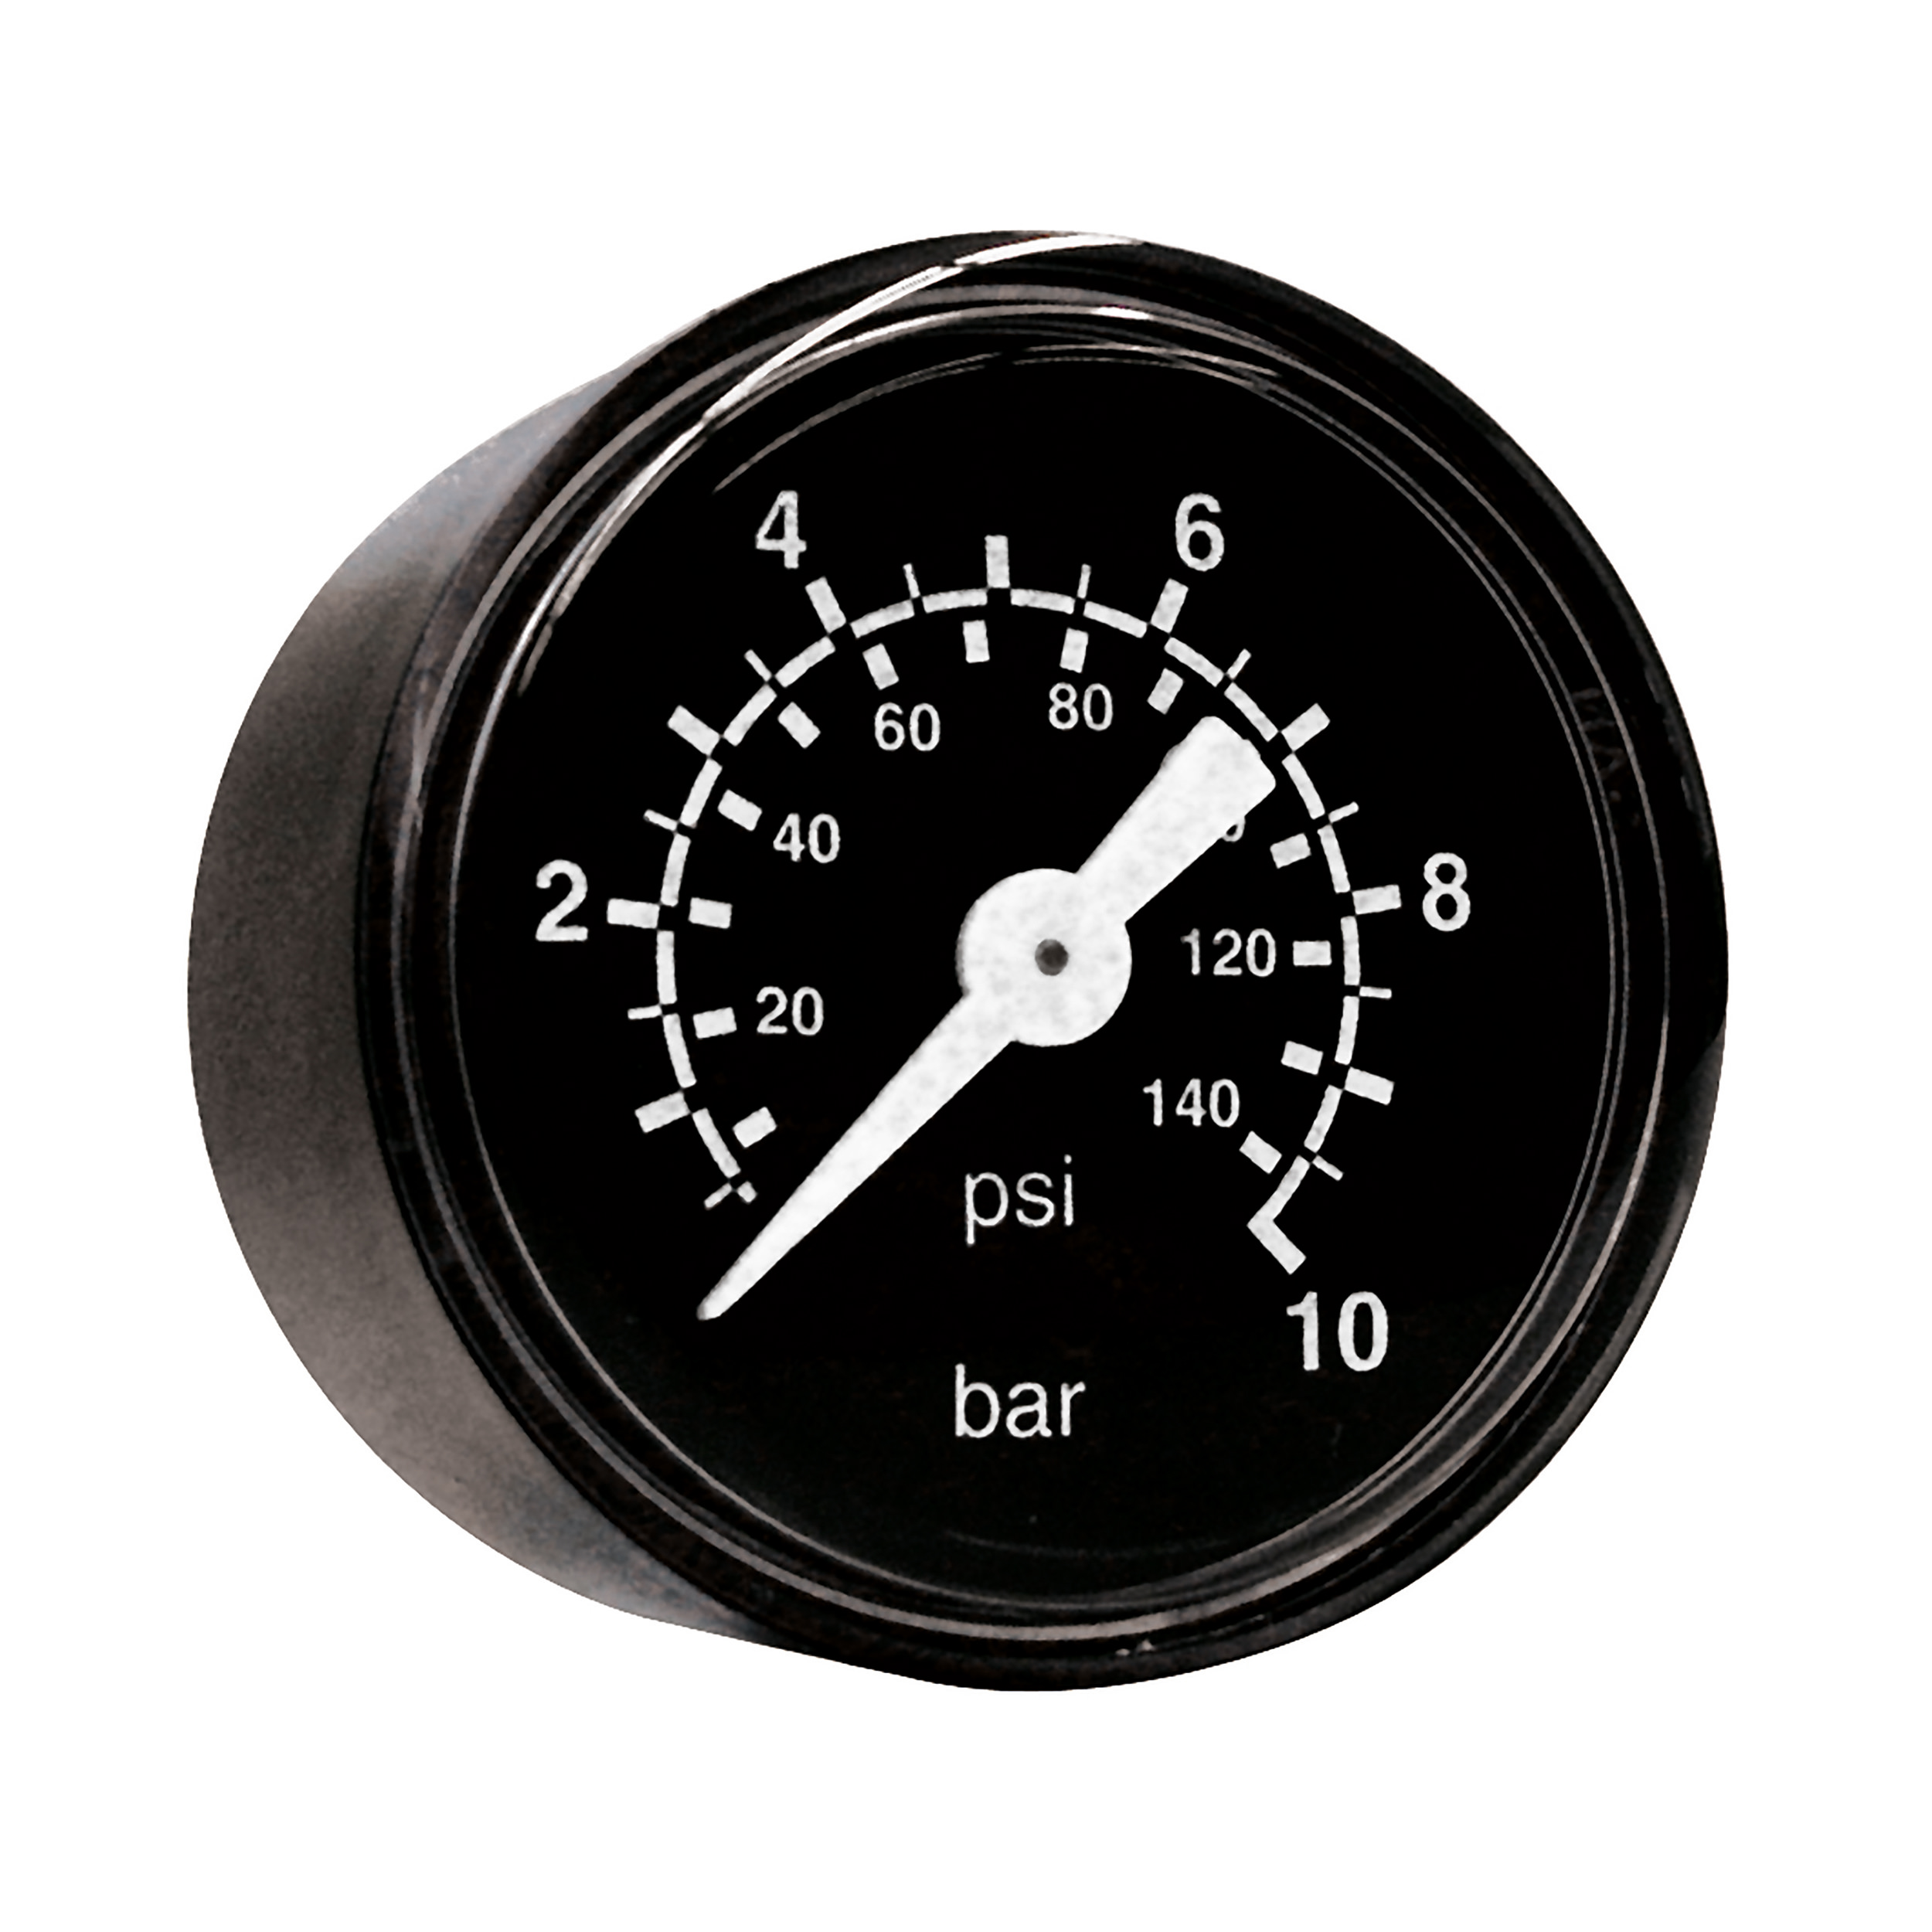 Bourdon-tube gauge Ø40, class 2.5, base/imprint: black/white, horizontal connection: G⅛, display range: 0–232 psi